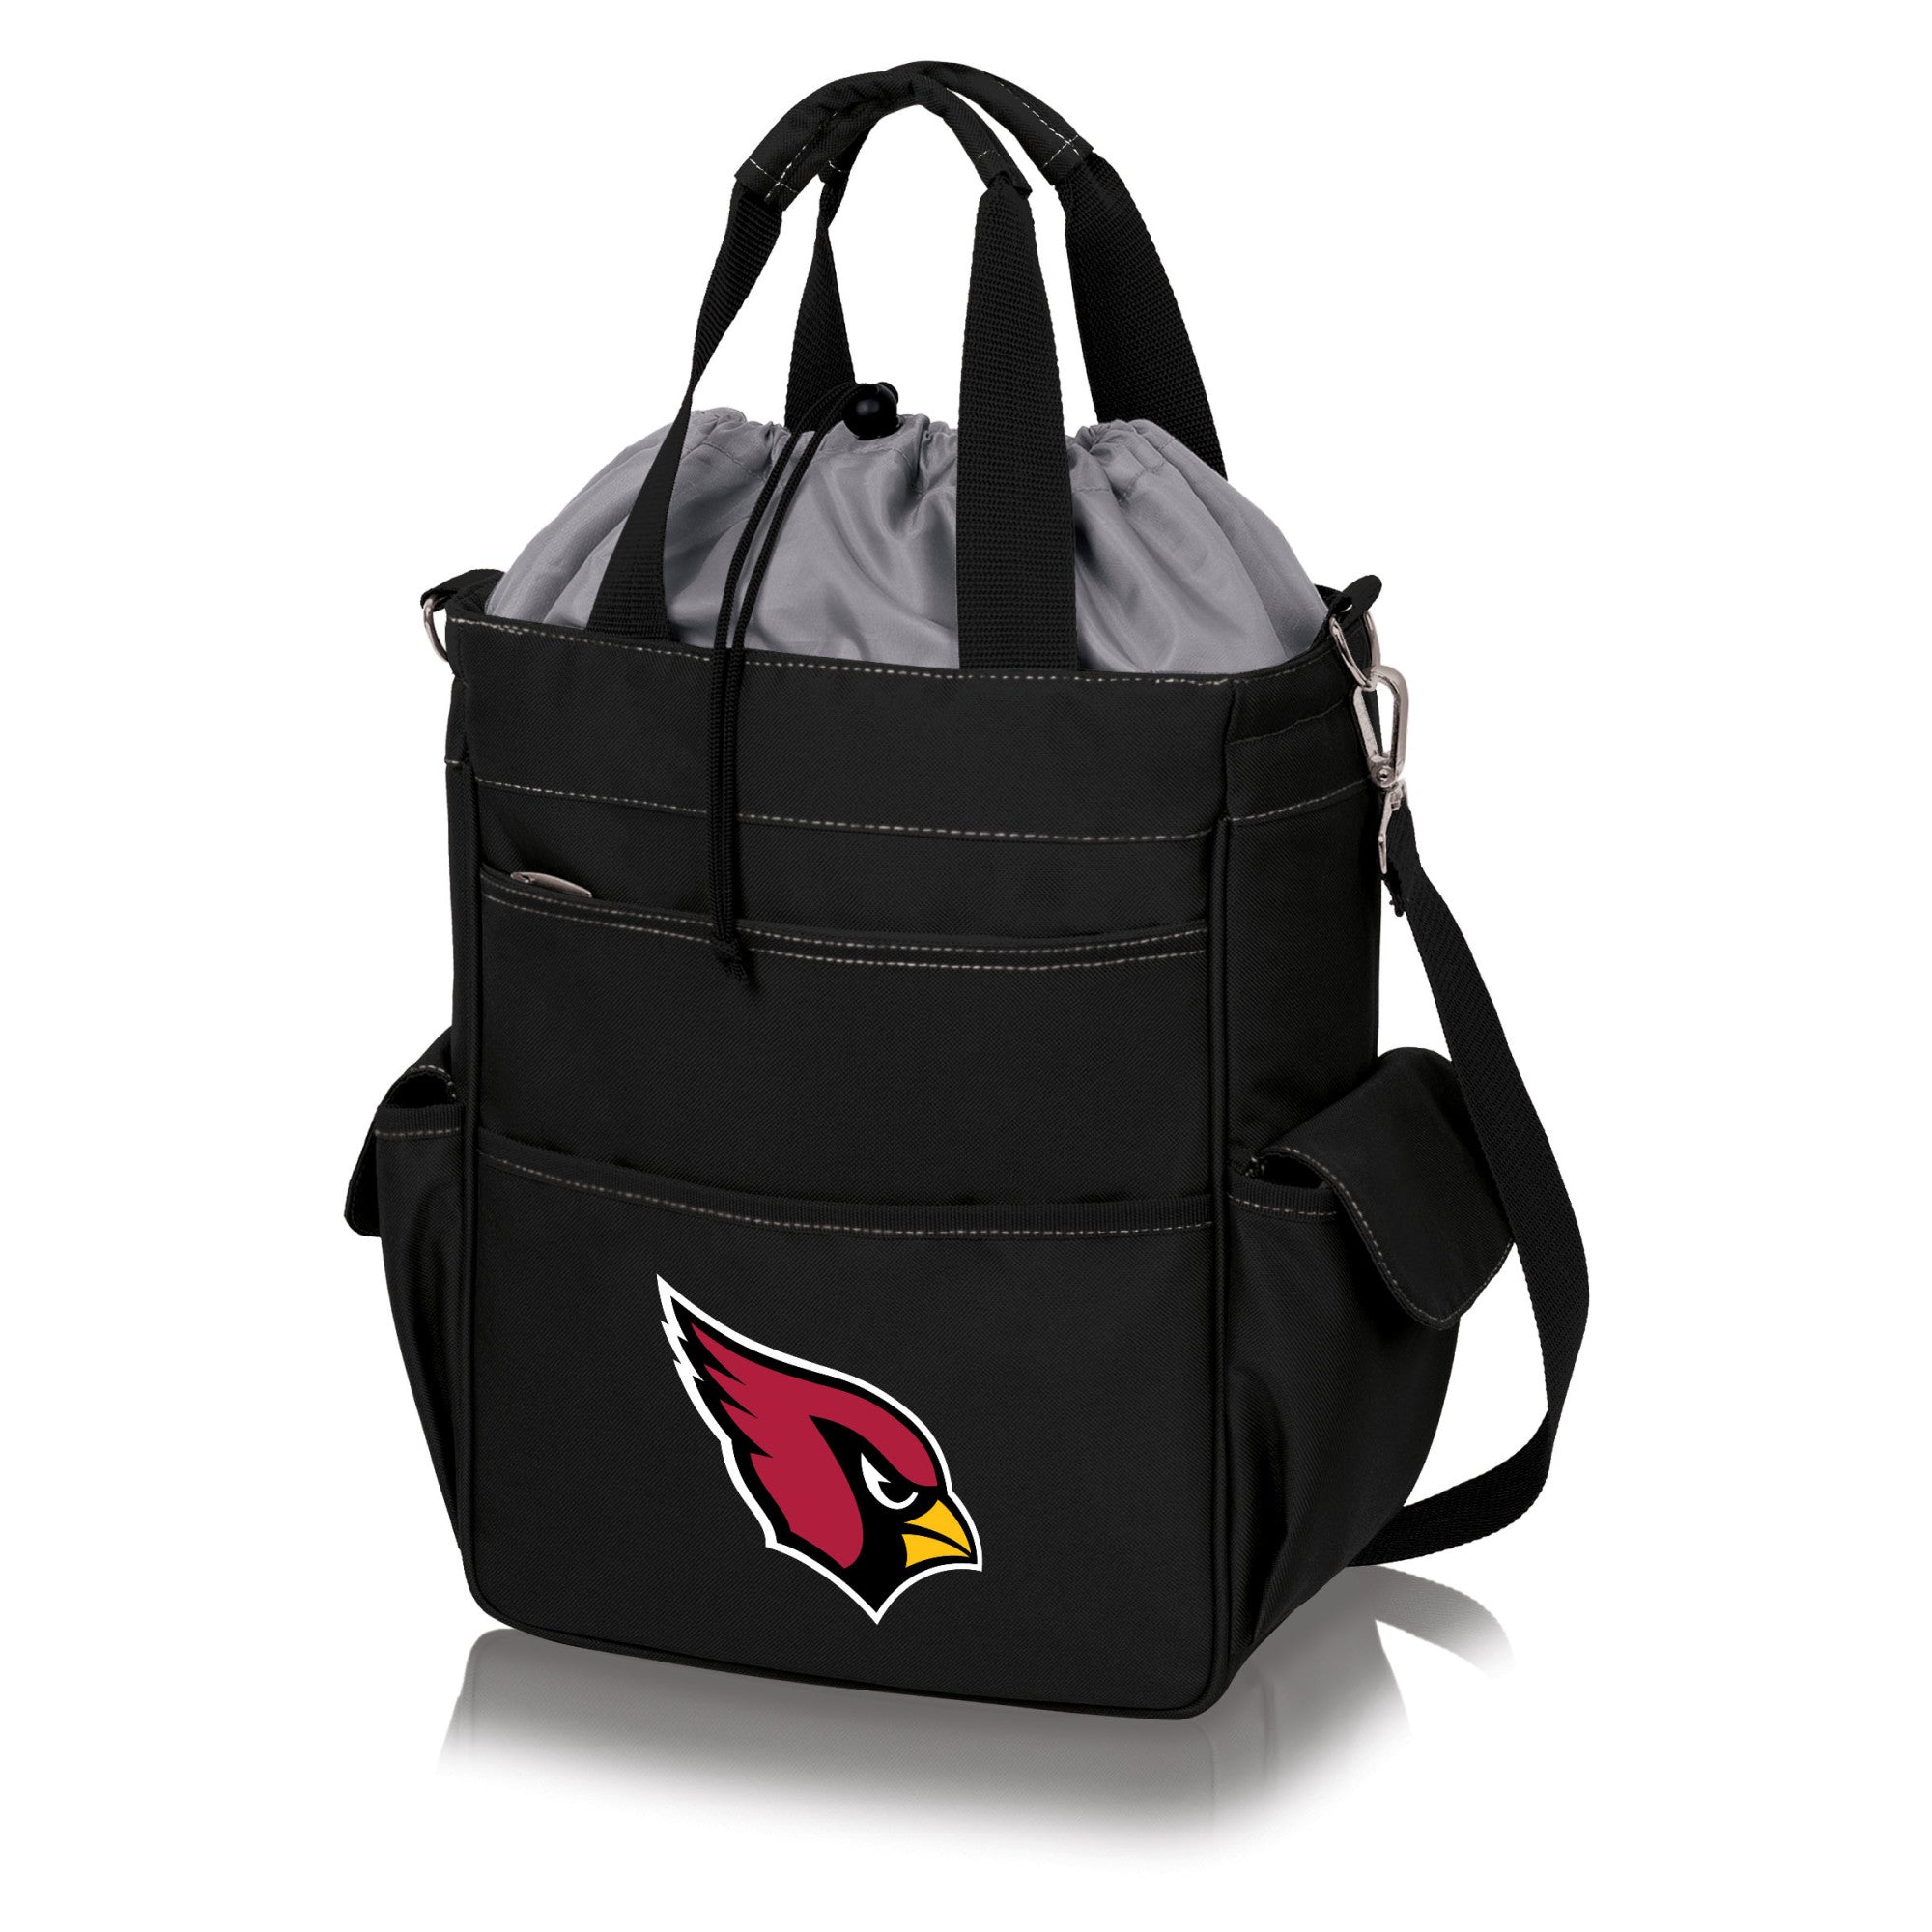 Arizona Cardinals - Activo Cooler Tote Bag, (Black with Gray Accents)